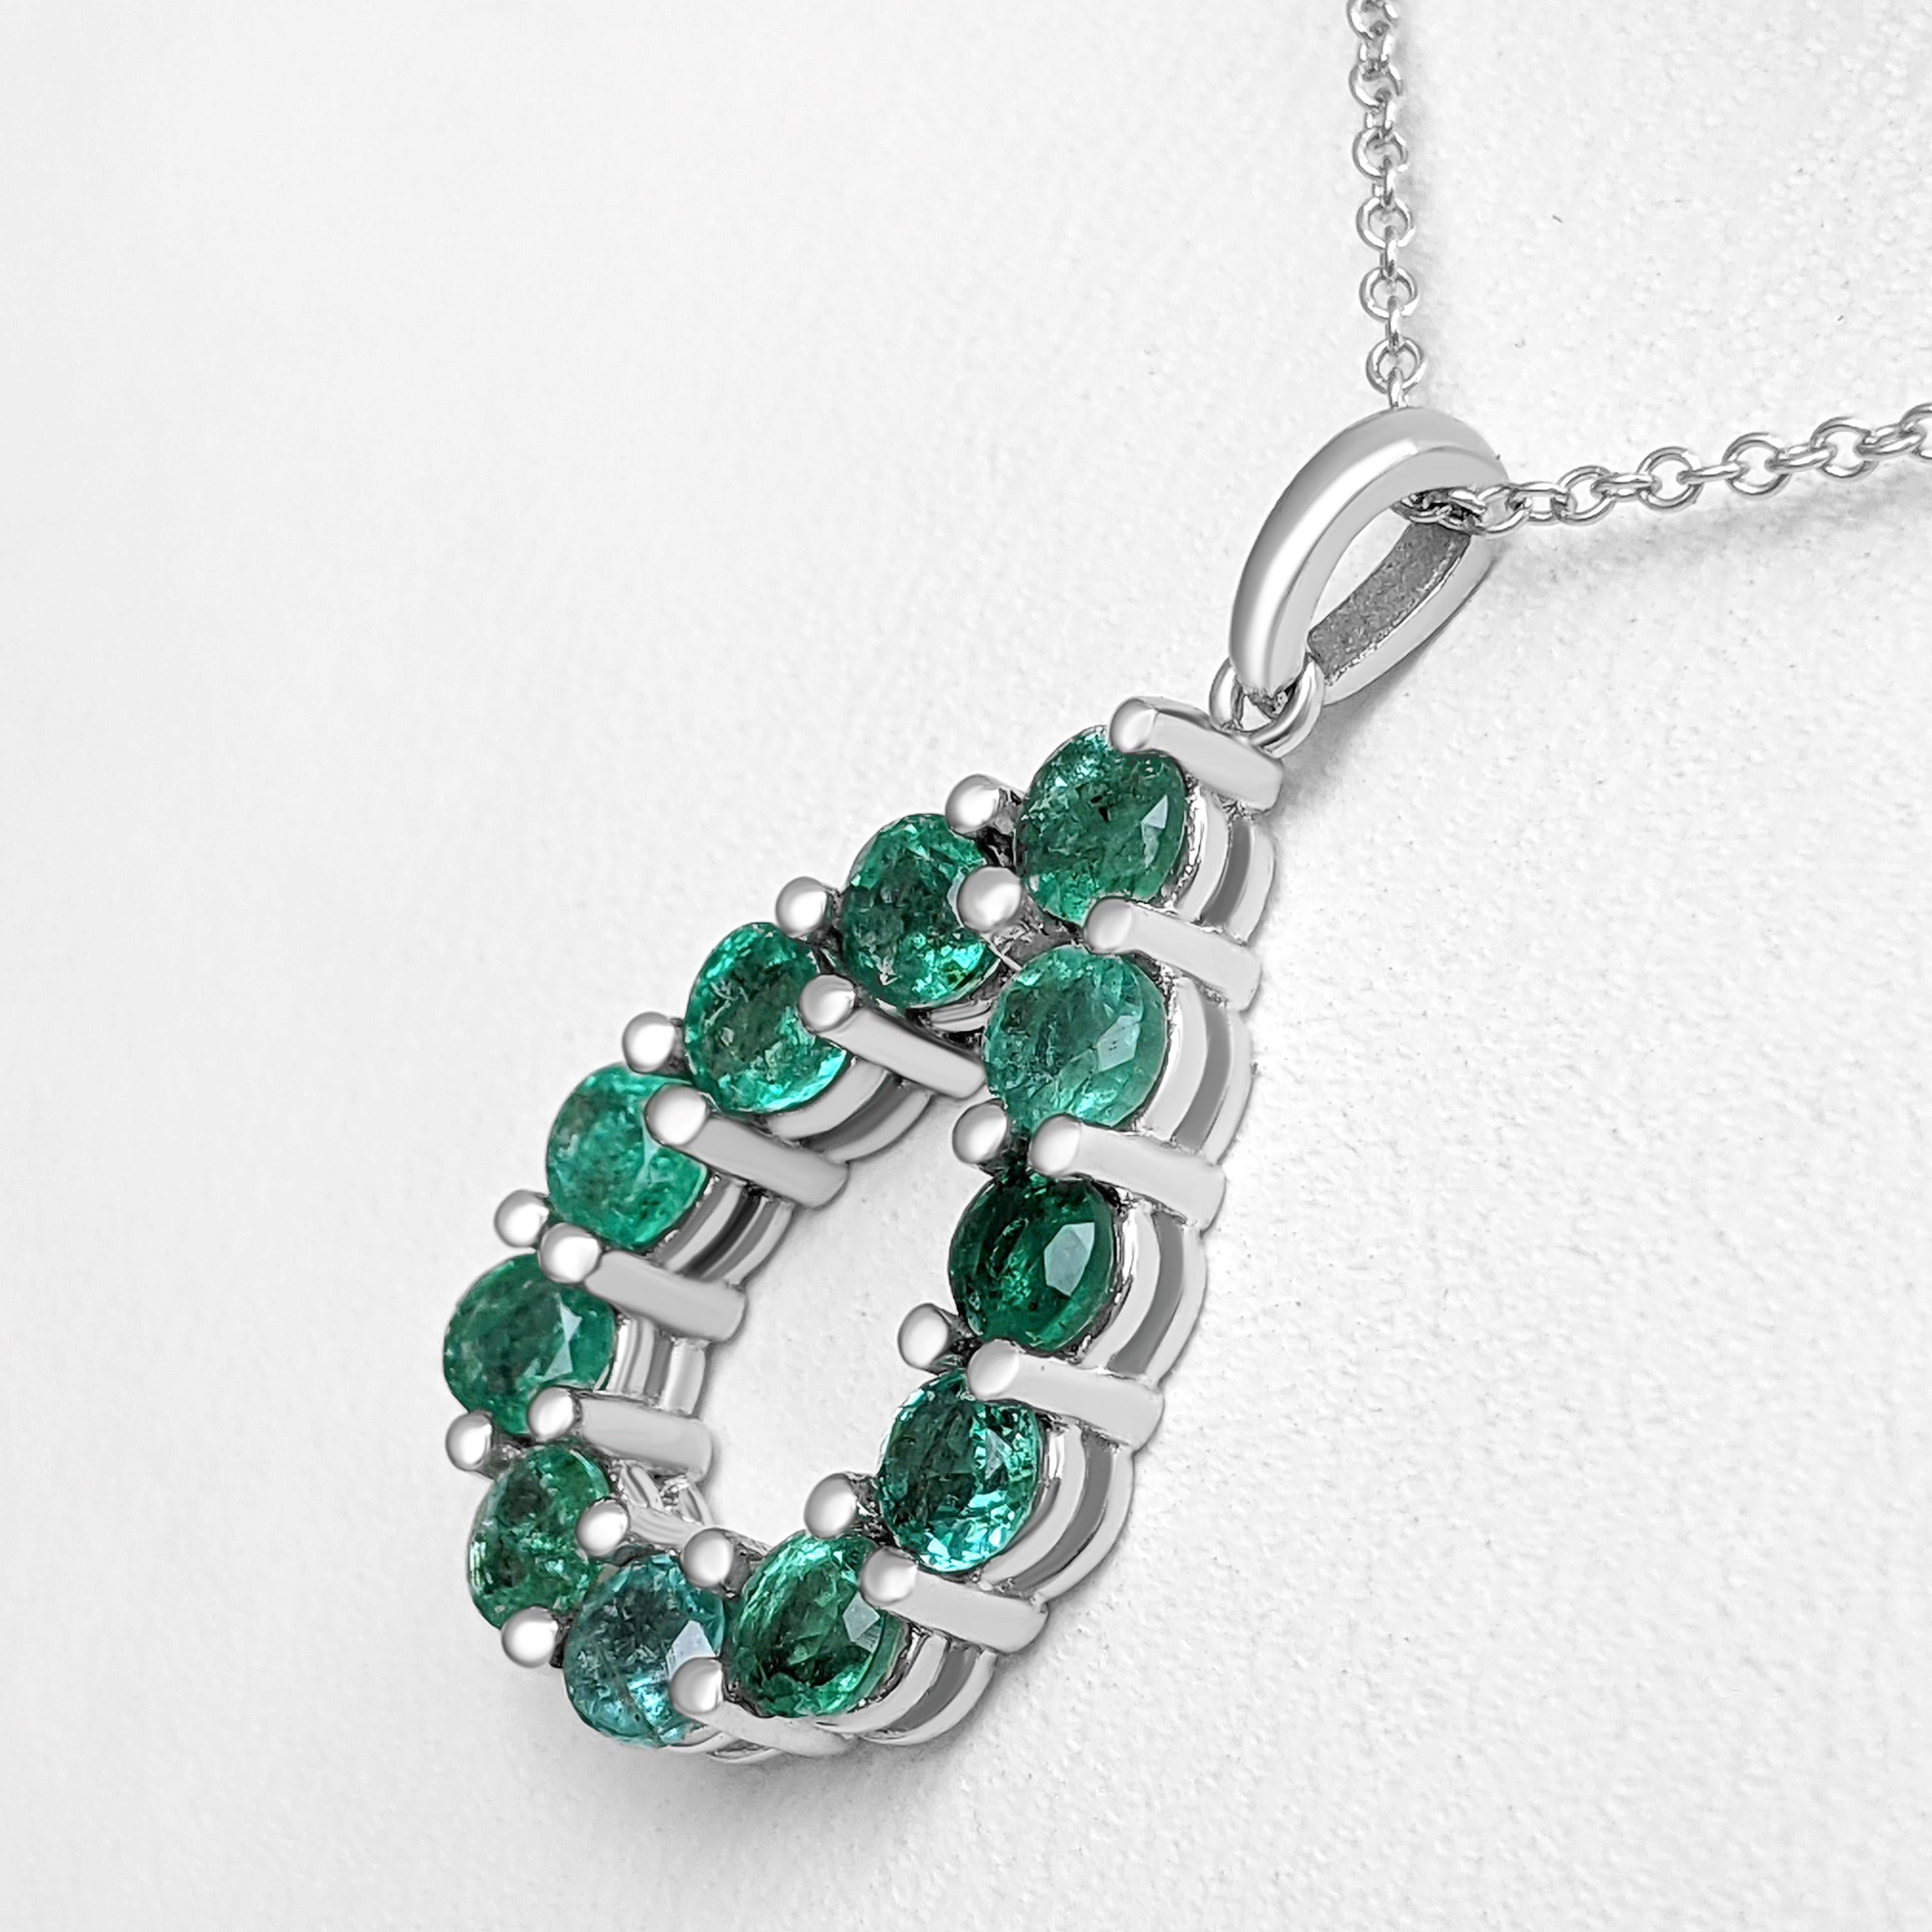 NO RESERVE! 1.61 Carat Emerald, 14 Karat White Gold, Necklace with Pendant 1